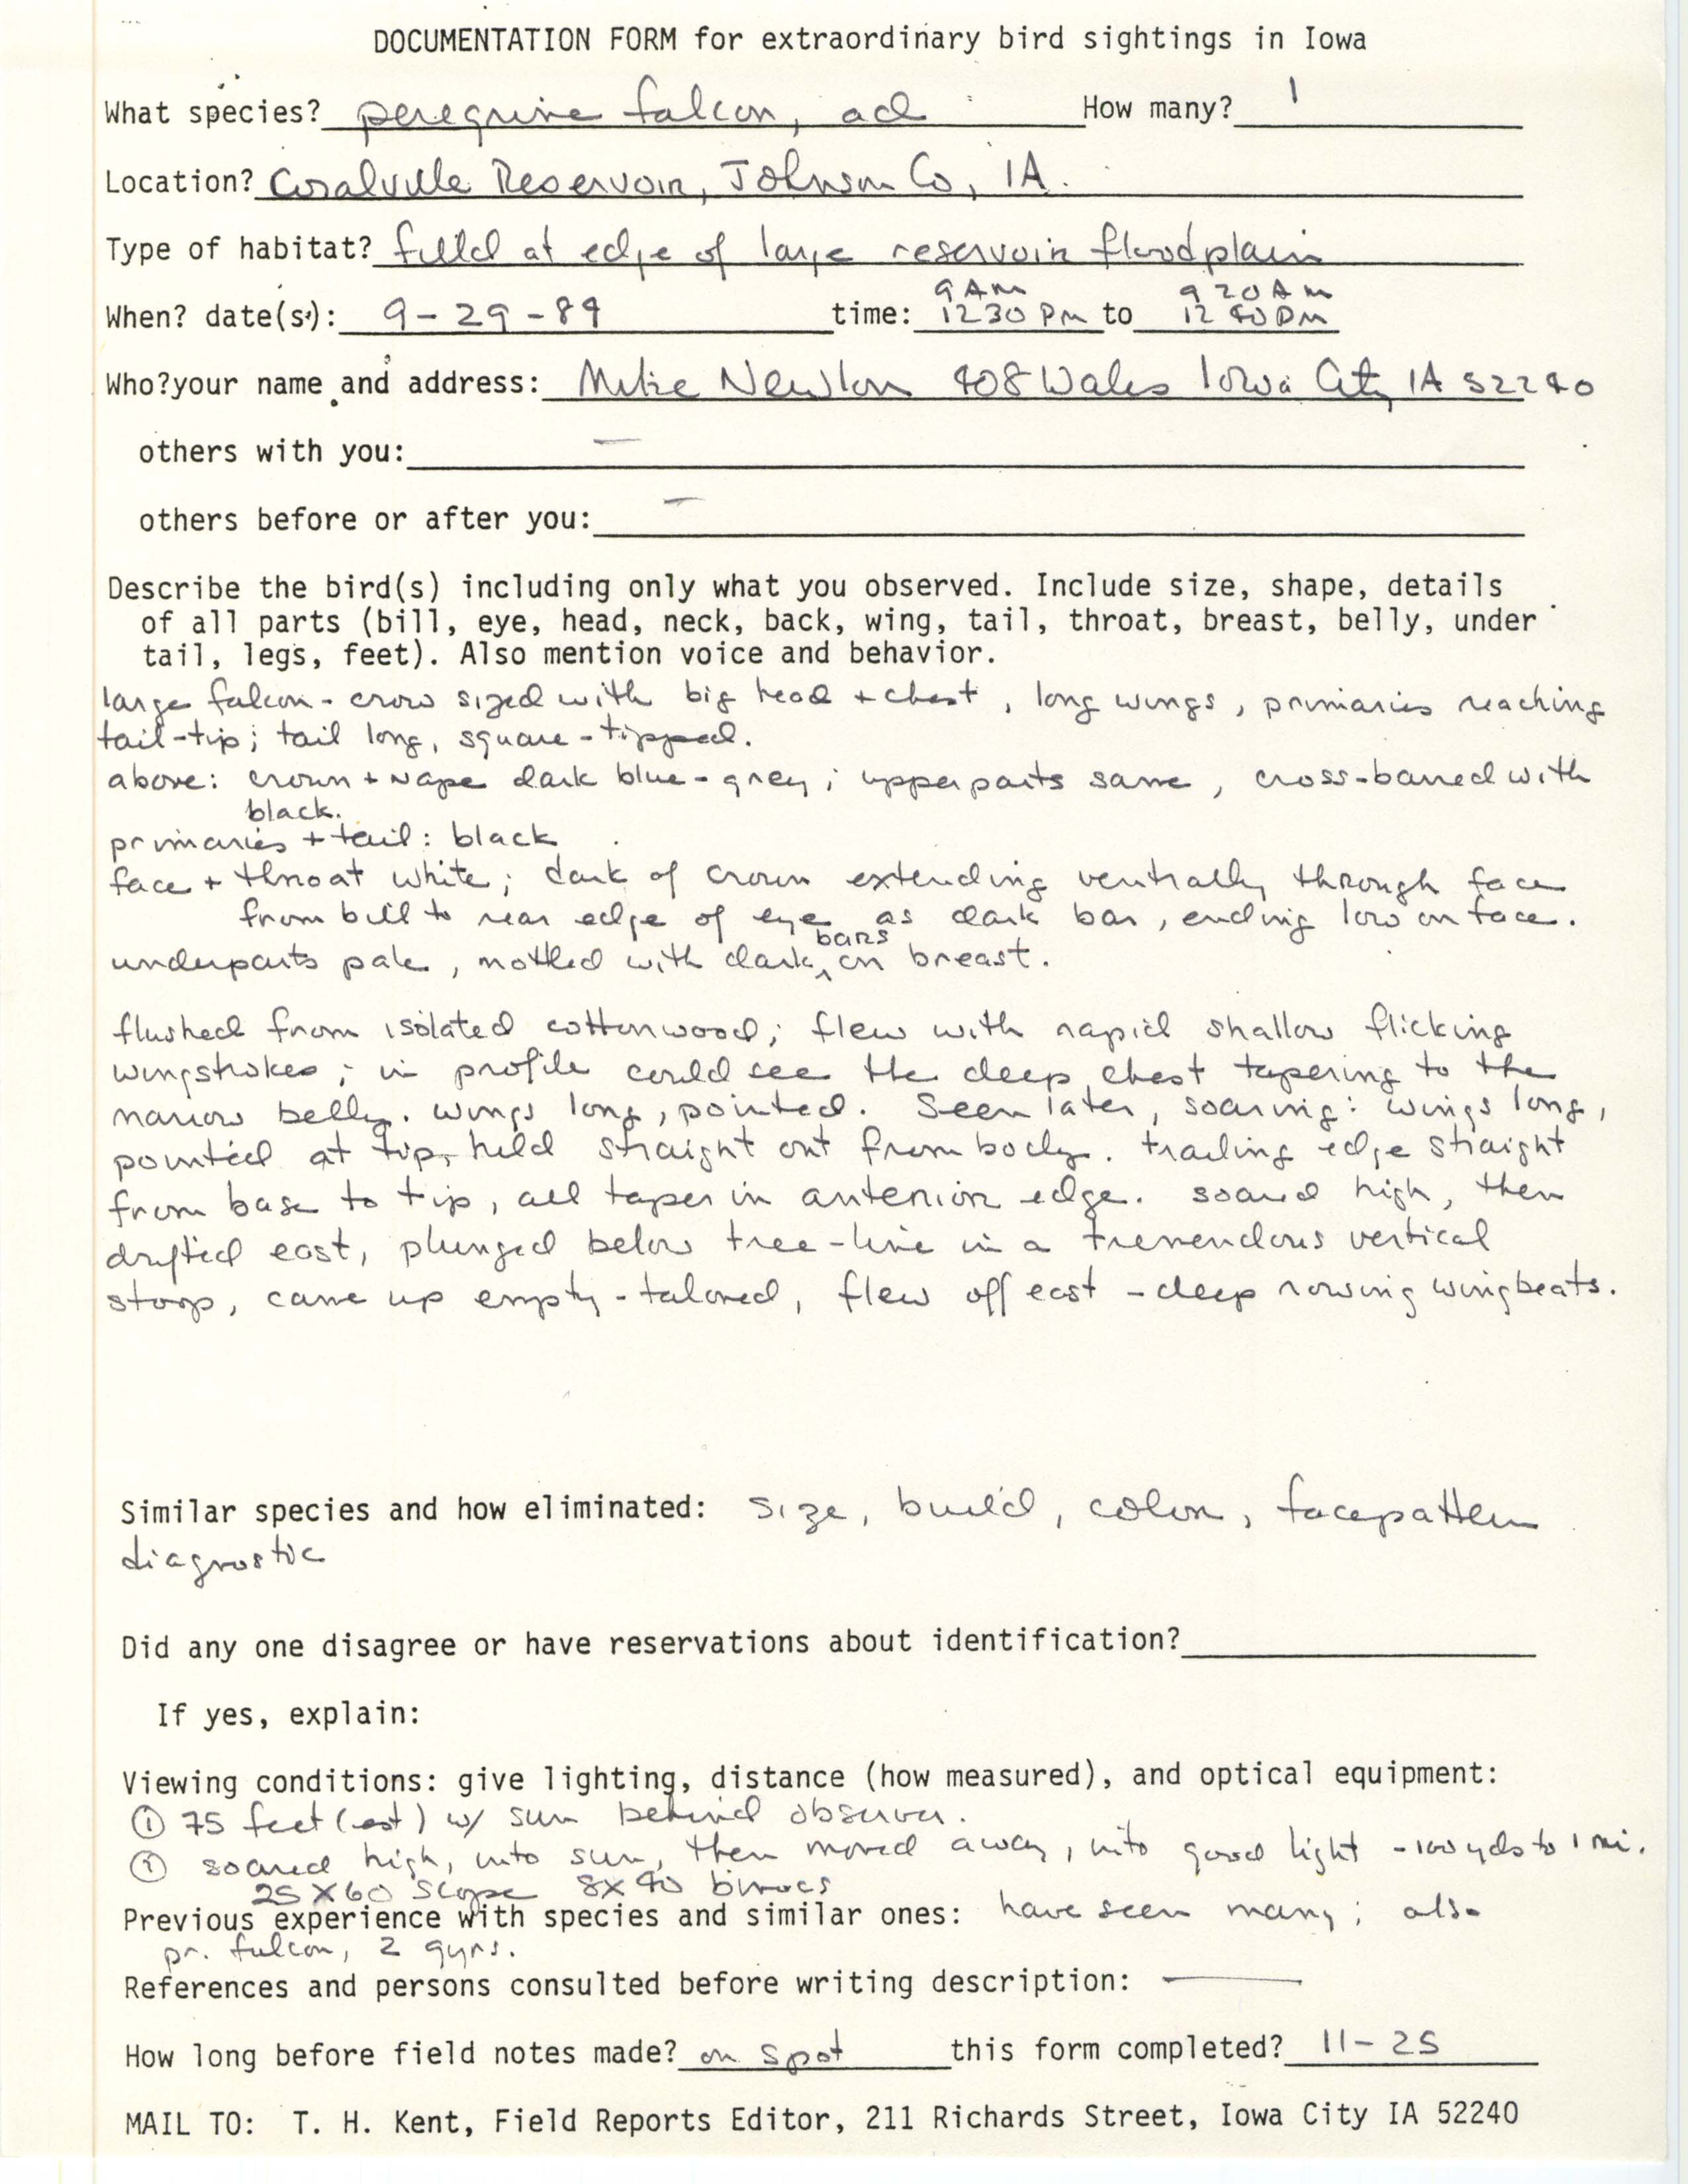 Rare bird documentation form for Peregrine Falcon at Coralville Reservoir, 1989